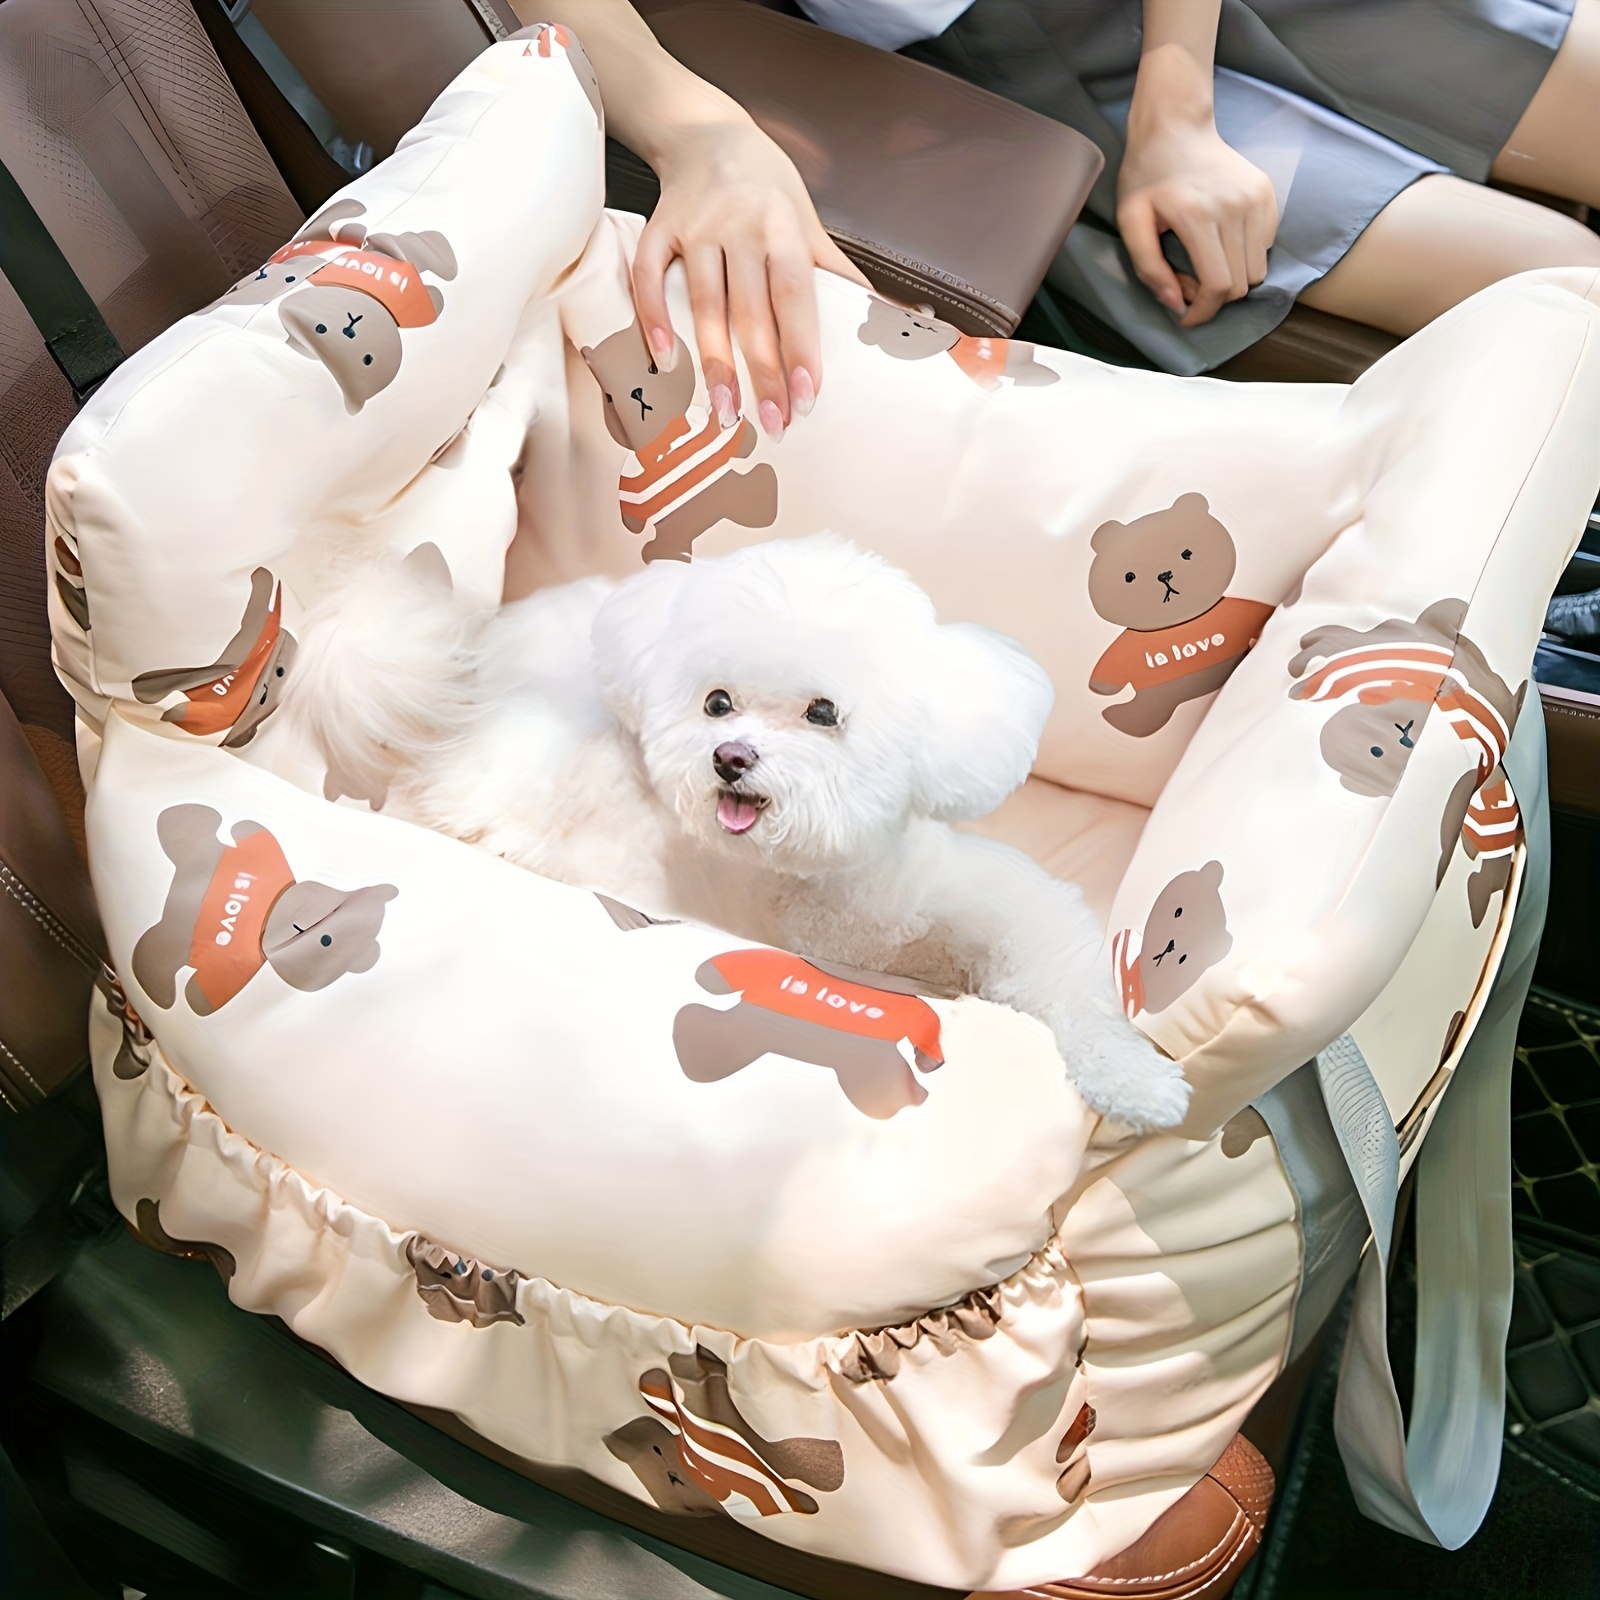 40X30x25 cm 10 cesta impermeable plegable del transportador de coche para  gato pequeño mascota perro bolsa de asiento de seguridad